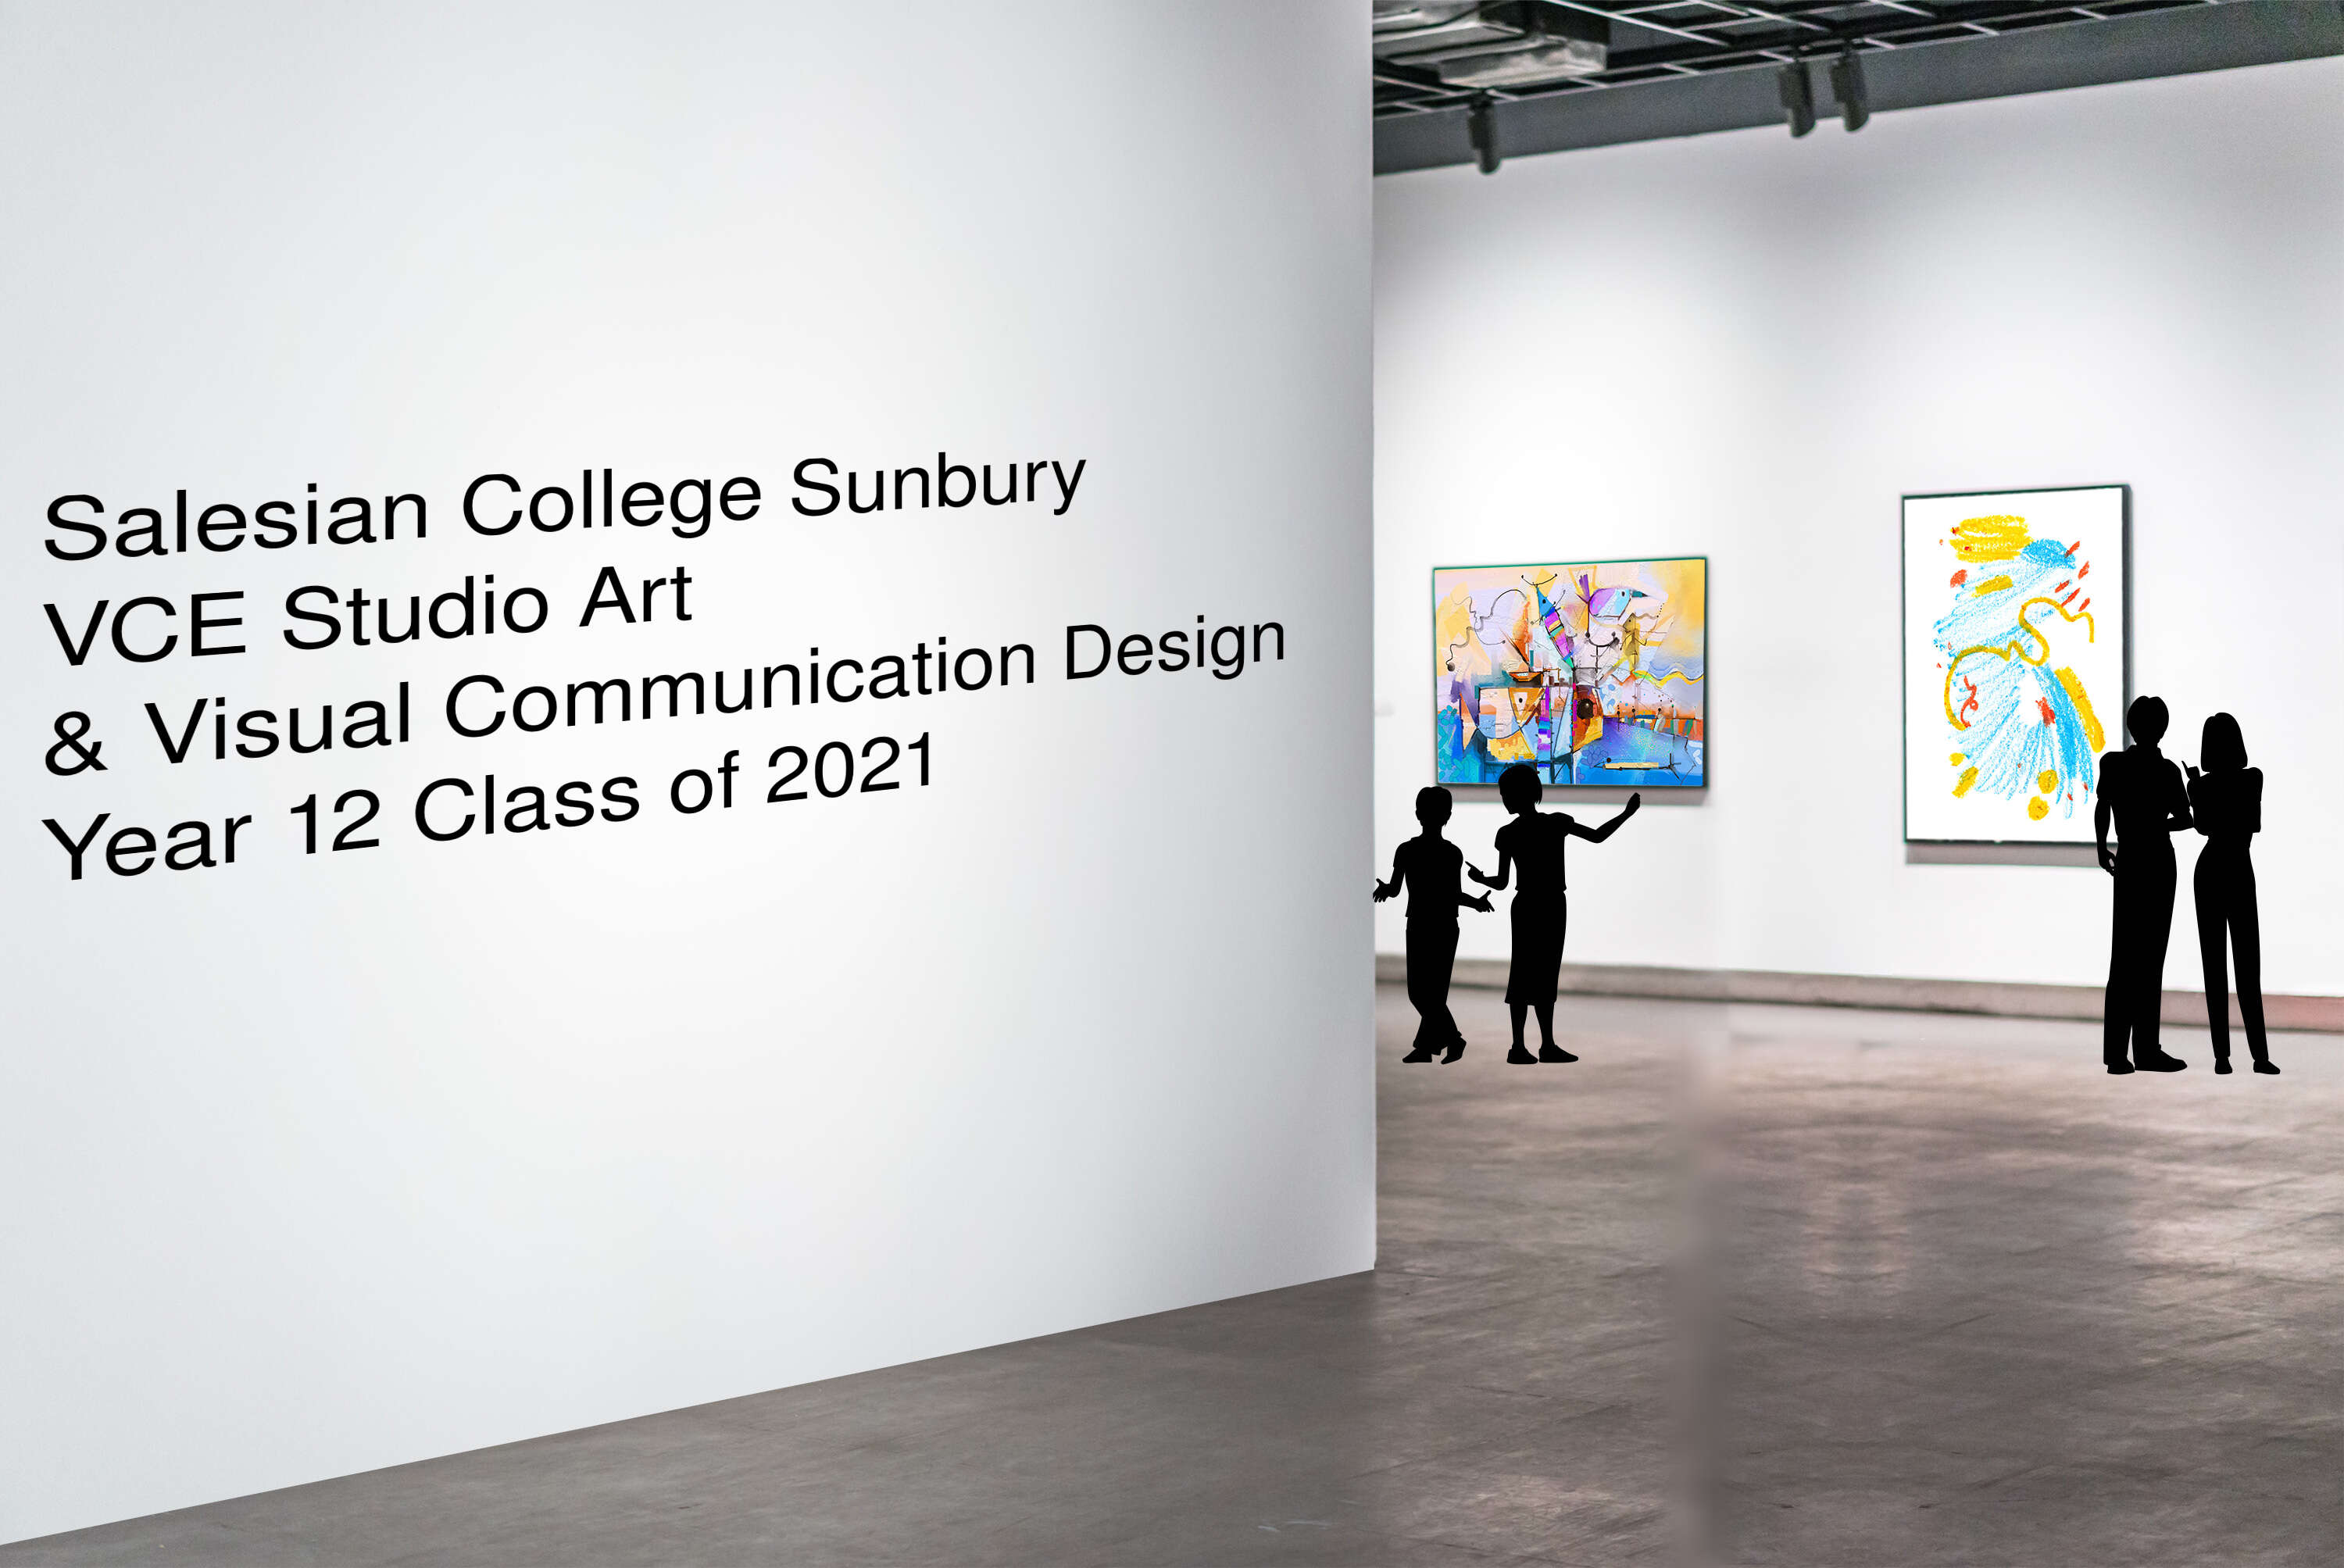       Salesian College Sunbury
              VCE Studio Art 
&amp; Visual Communication Design 
          Year 12 Class of 2021 